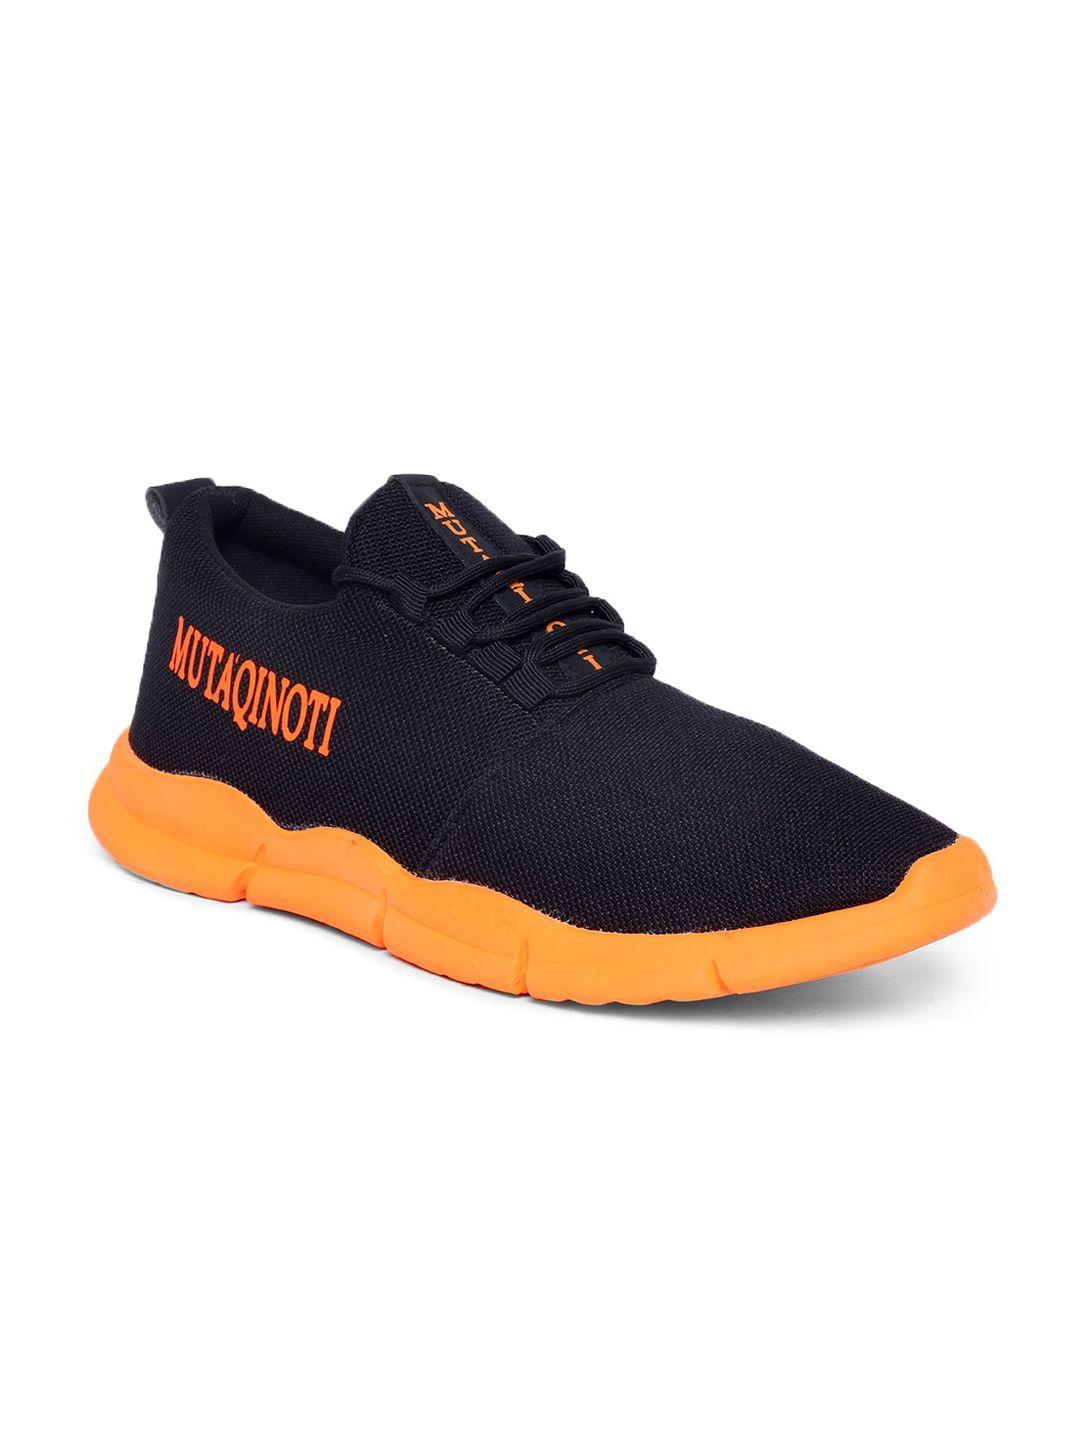 mutaqinoti men black & orange woven design sneakers